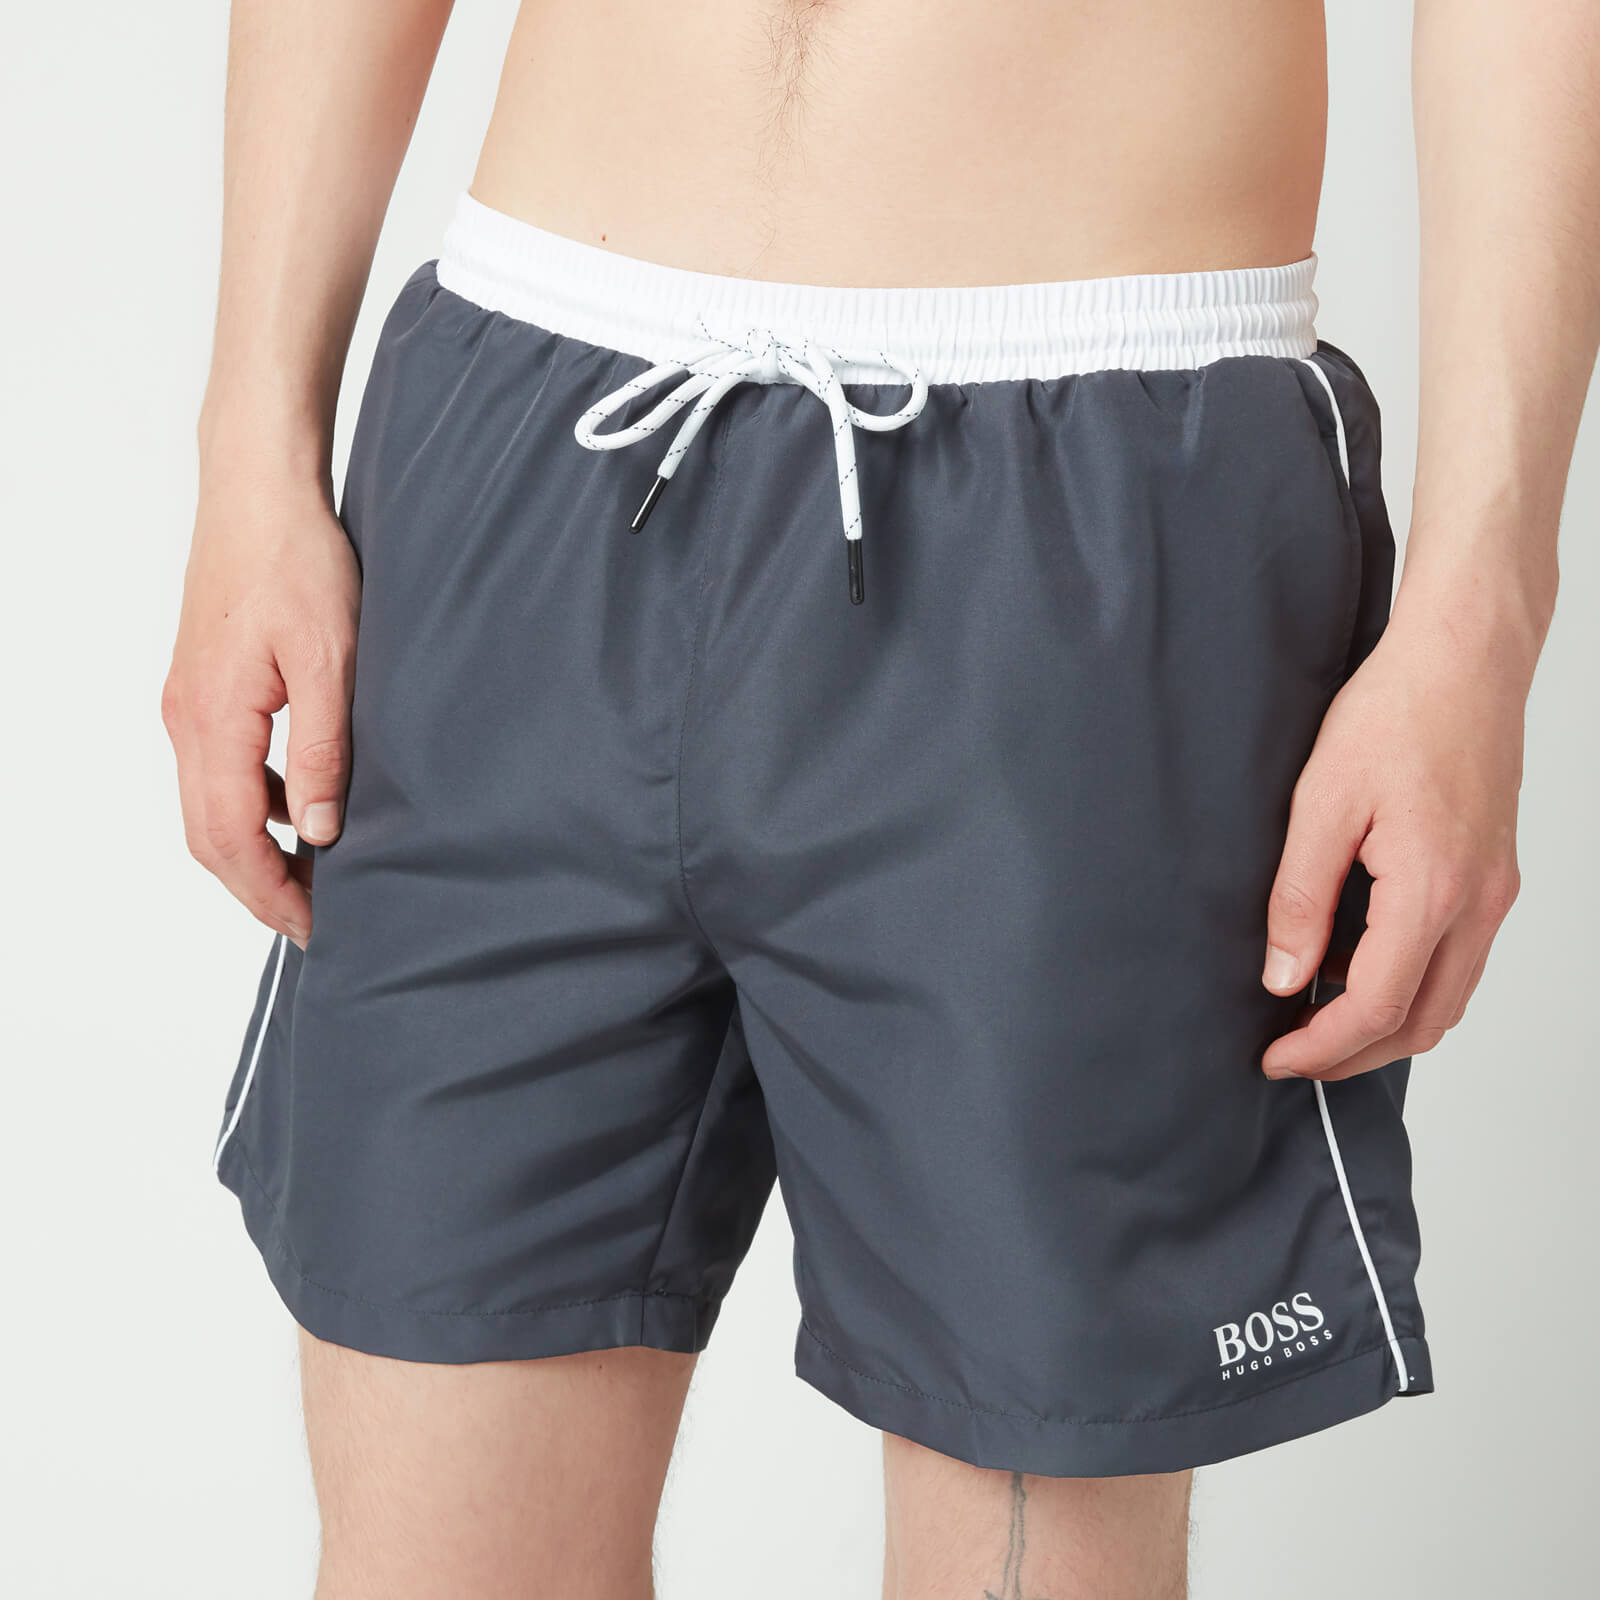 BOSS Swimwear Men's Starfish Medium Length Swimshorts - Dark Grey - S